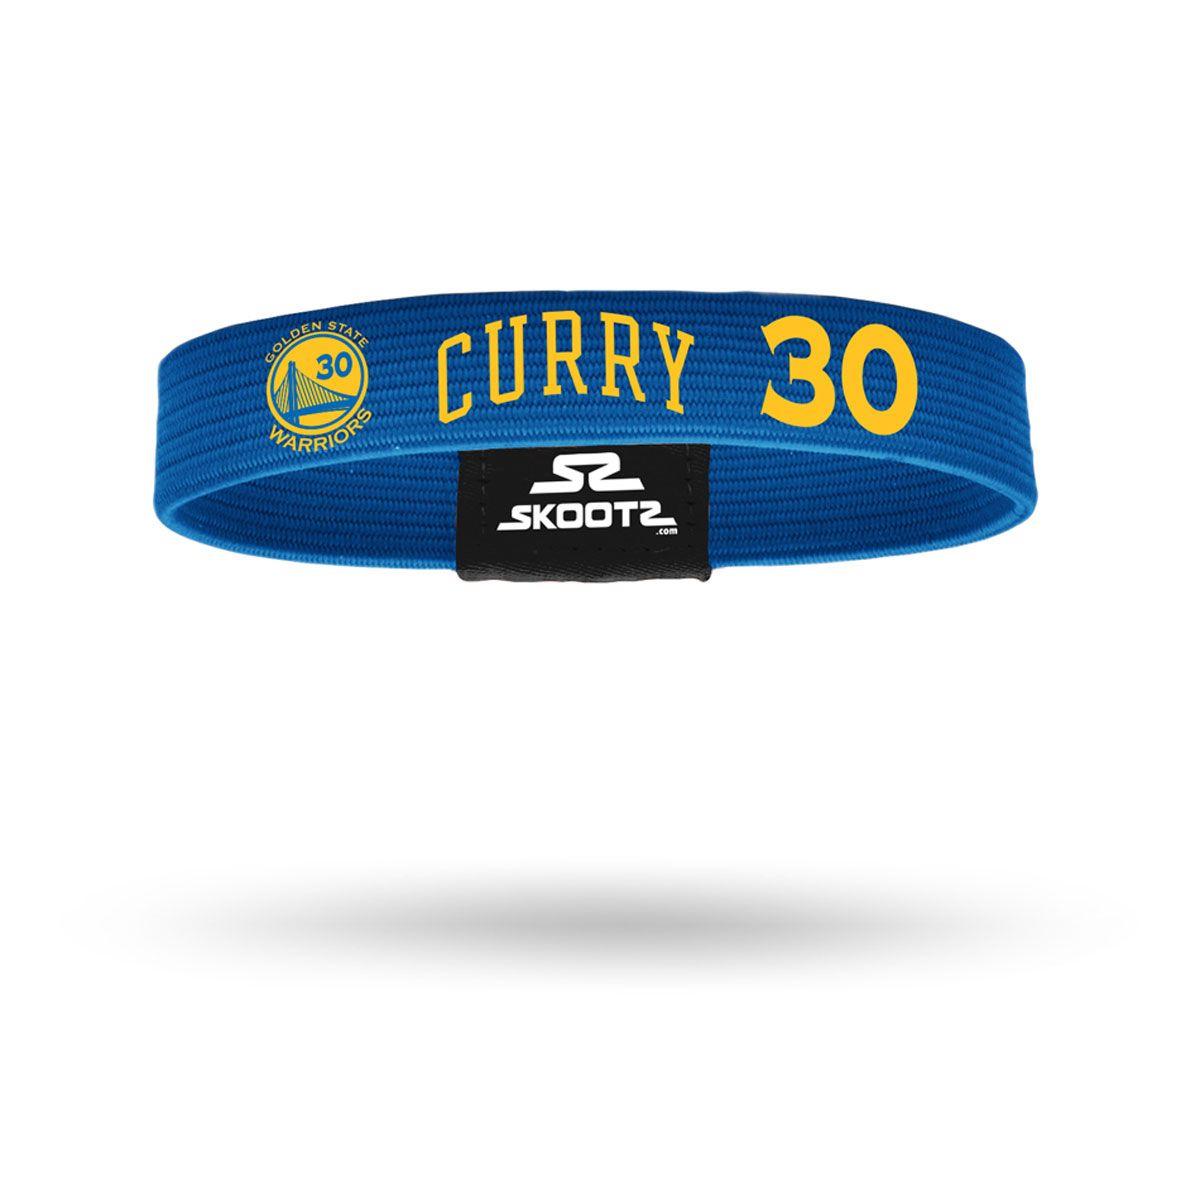 Stephen Curry Logo - Golden State Warriors Skootz Stephen Curry Player Wristband